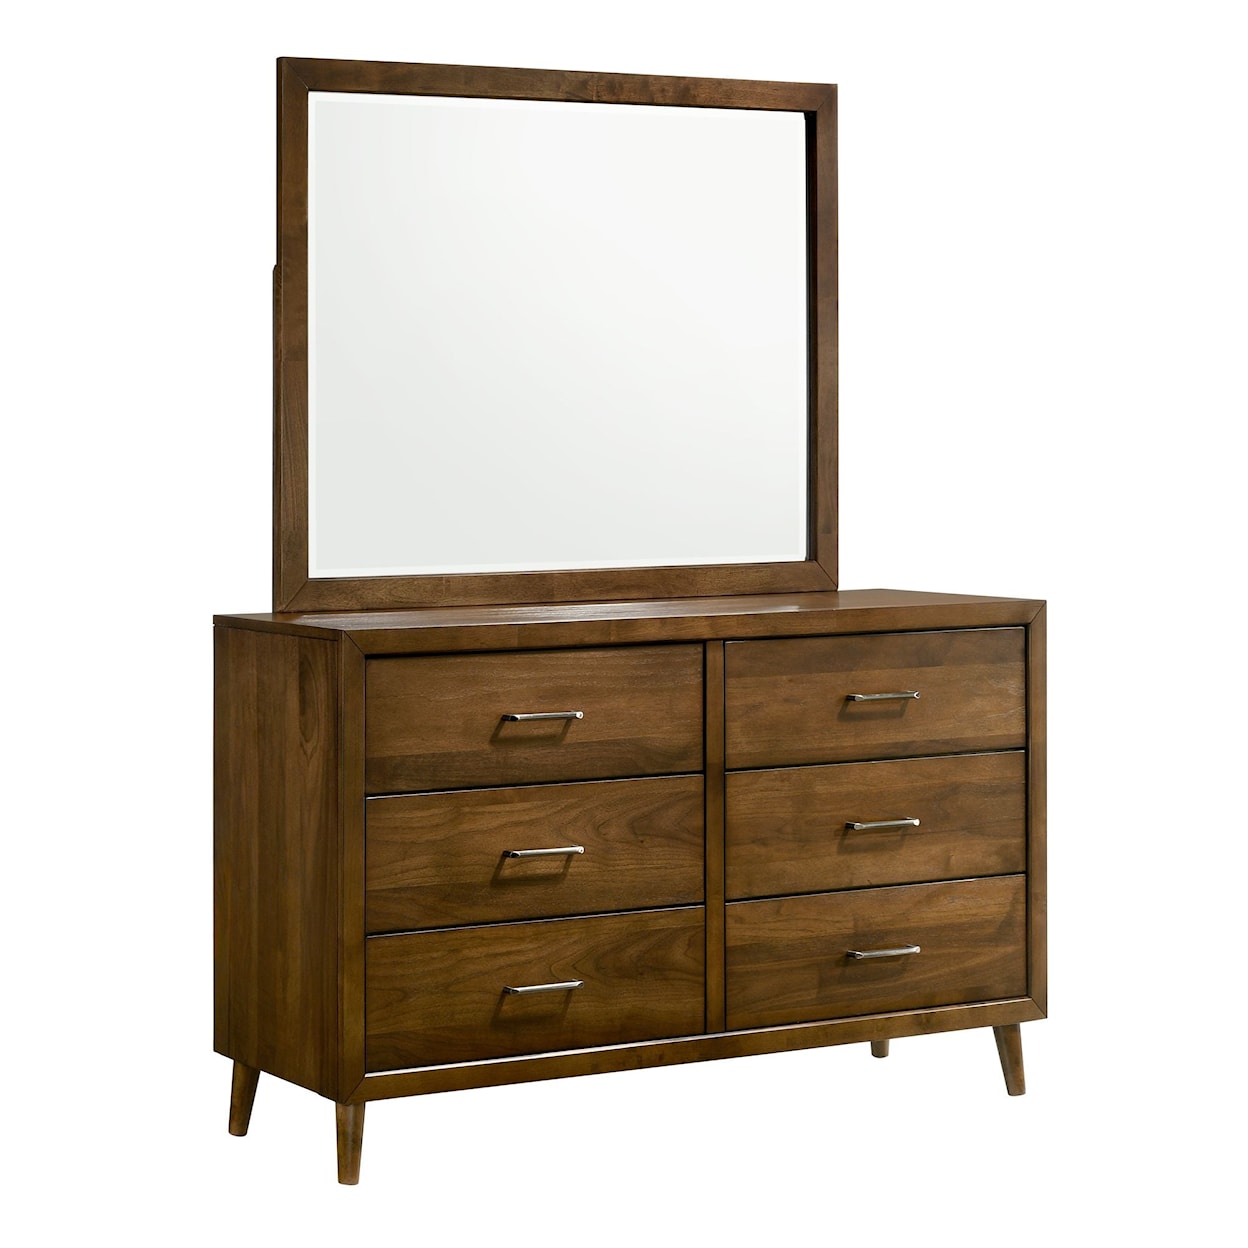 Elements International Malibu 6-Drawer Dresser with Mirror